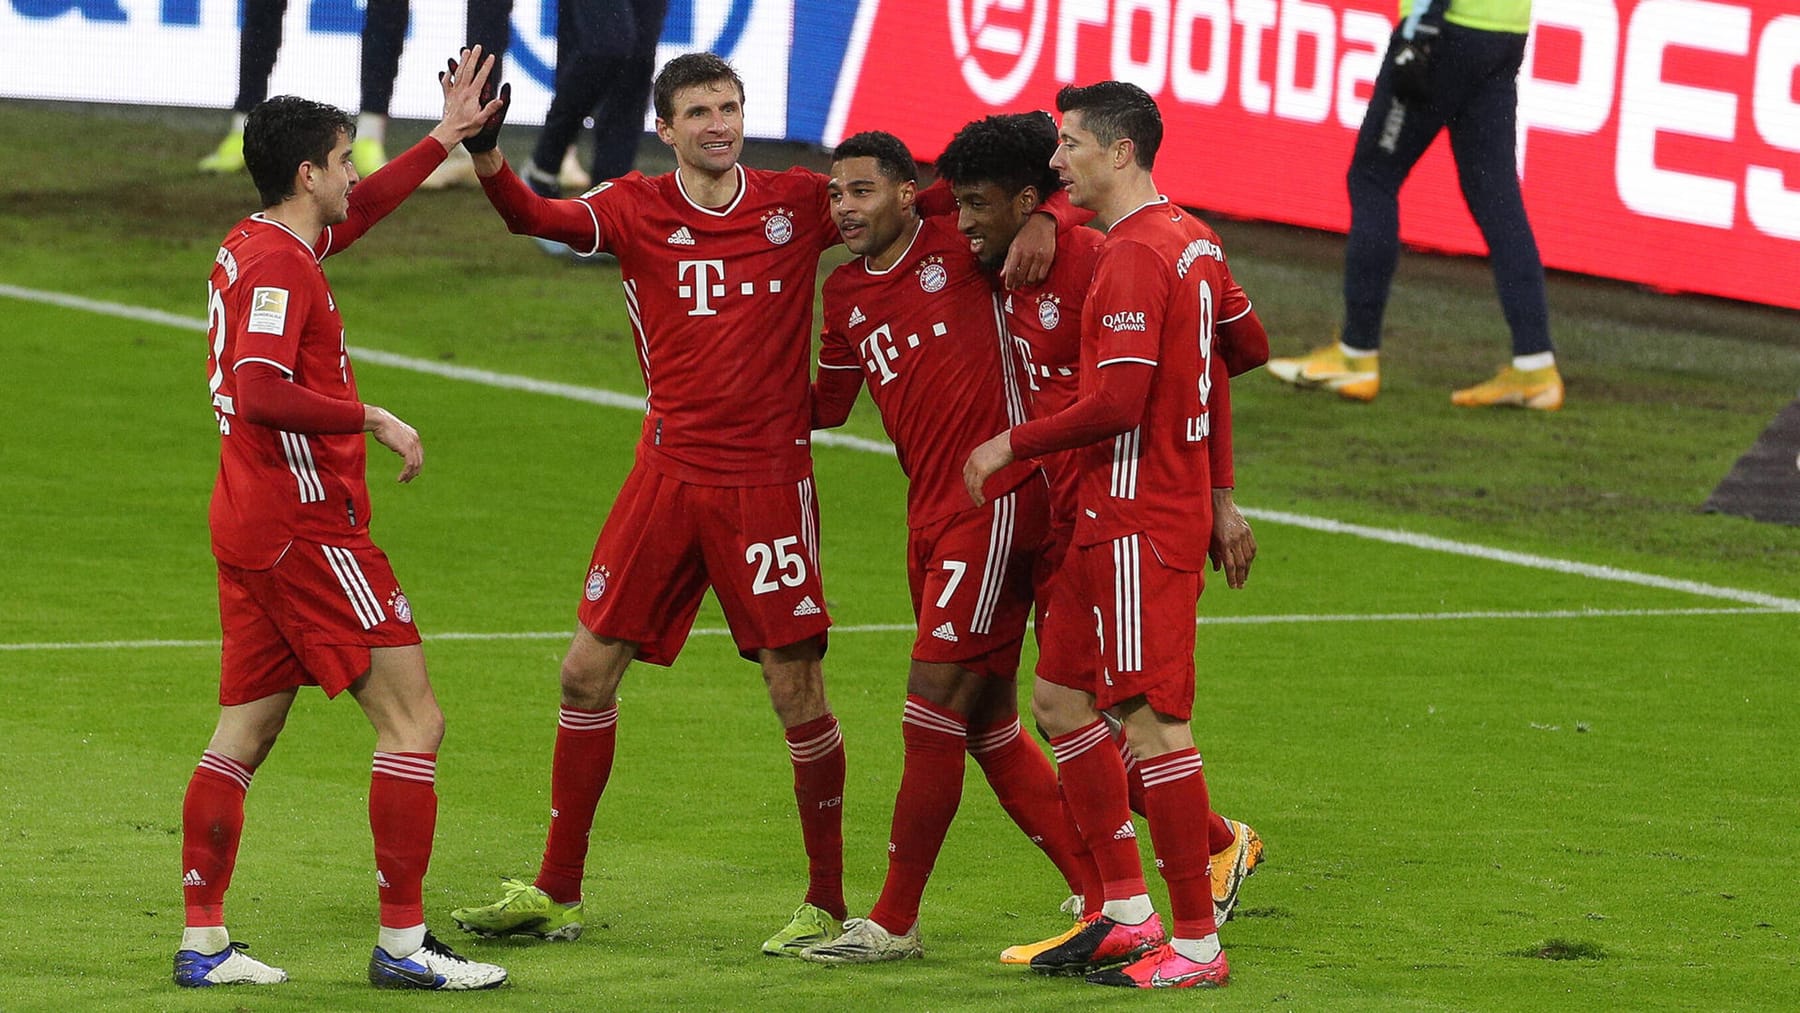 FC Bayern Amazon Prime dreht Doku über Rekordmeister